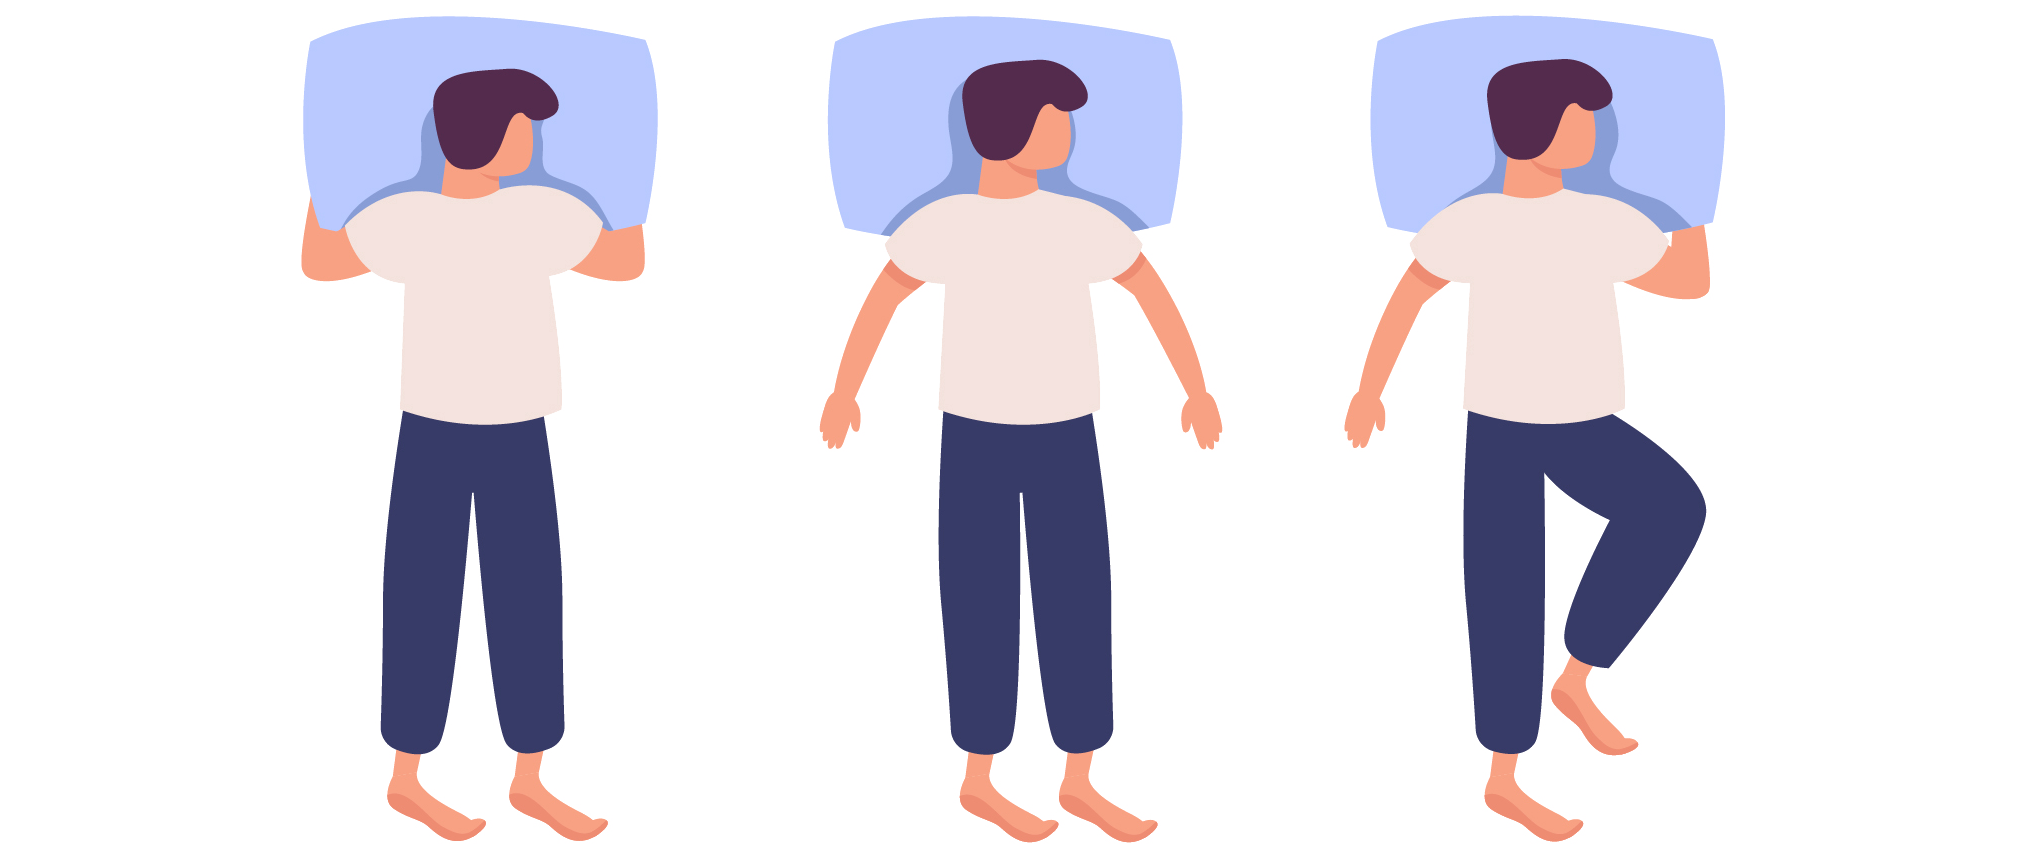 The Best Sleeping Positions for Your Back - Auburn Chiropractic Associates  - Auburn Chiropractor